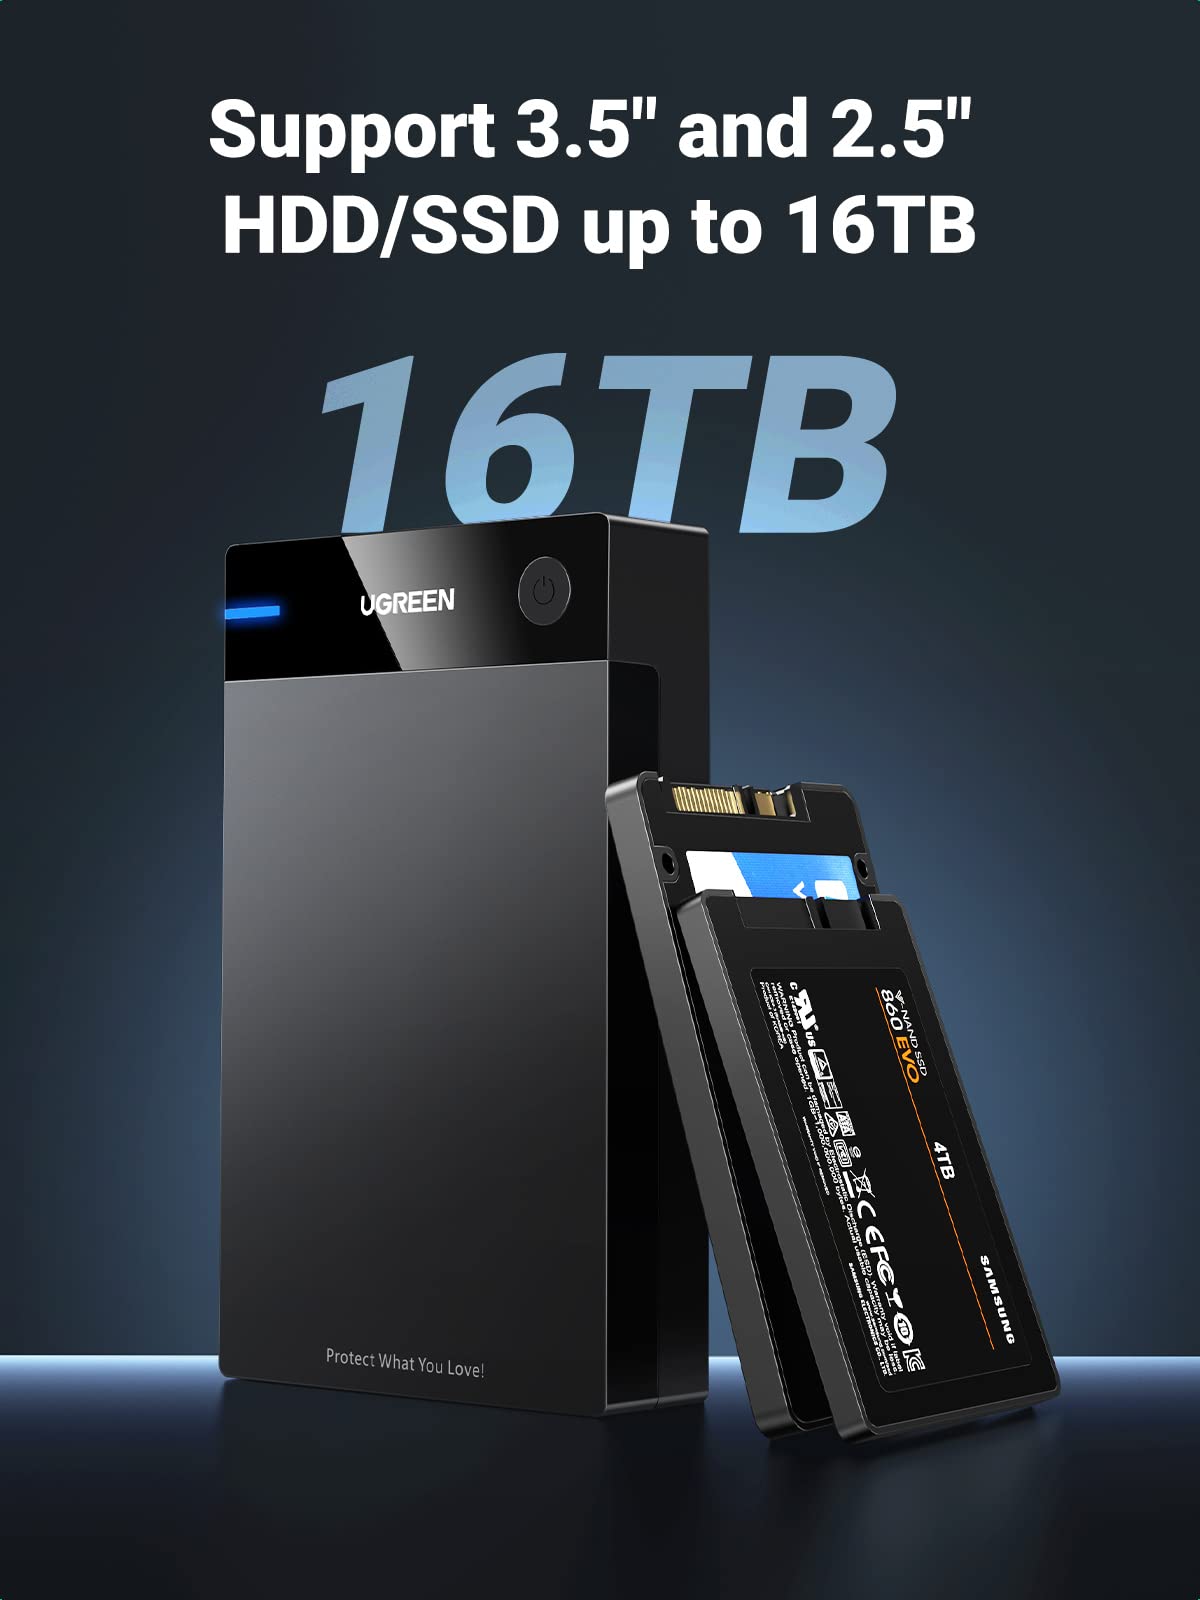 Ugreen USB 3.0 SATA HDD Enclosure - 16TB Support, Tool-free Docking Station